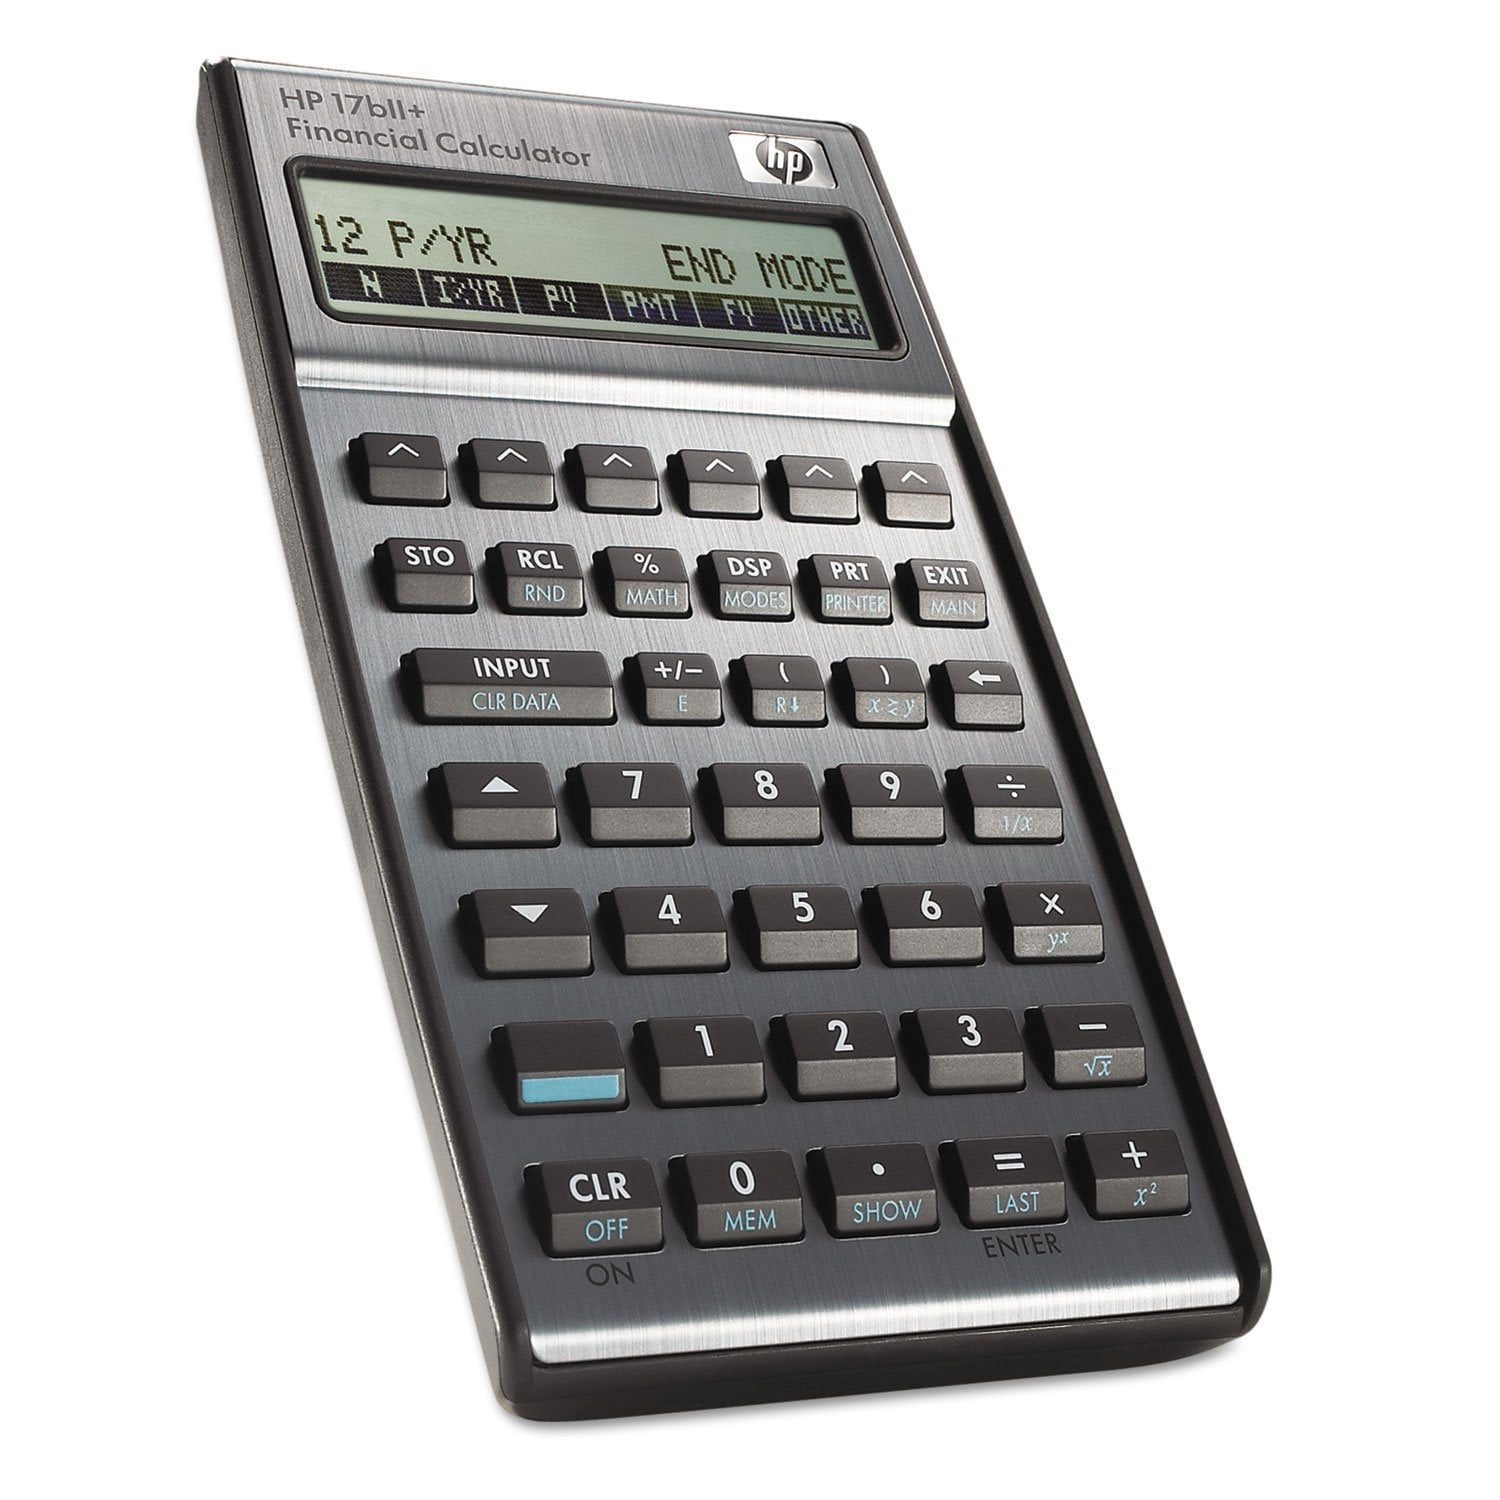 Financial Calculator for sale online HP 17bII 